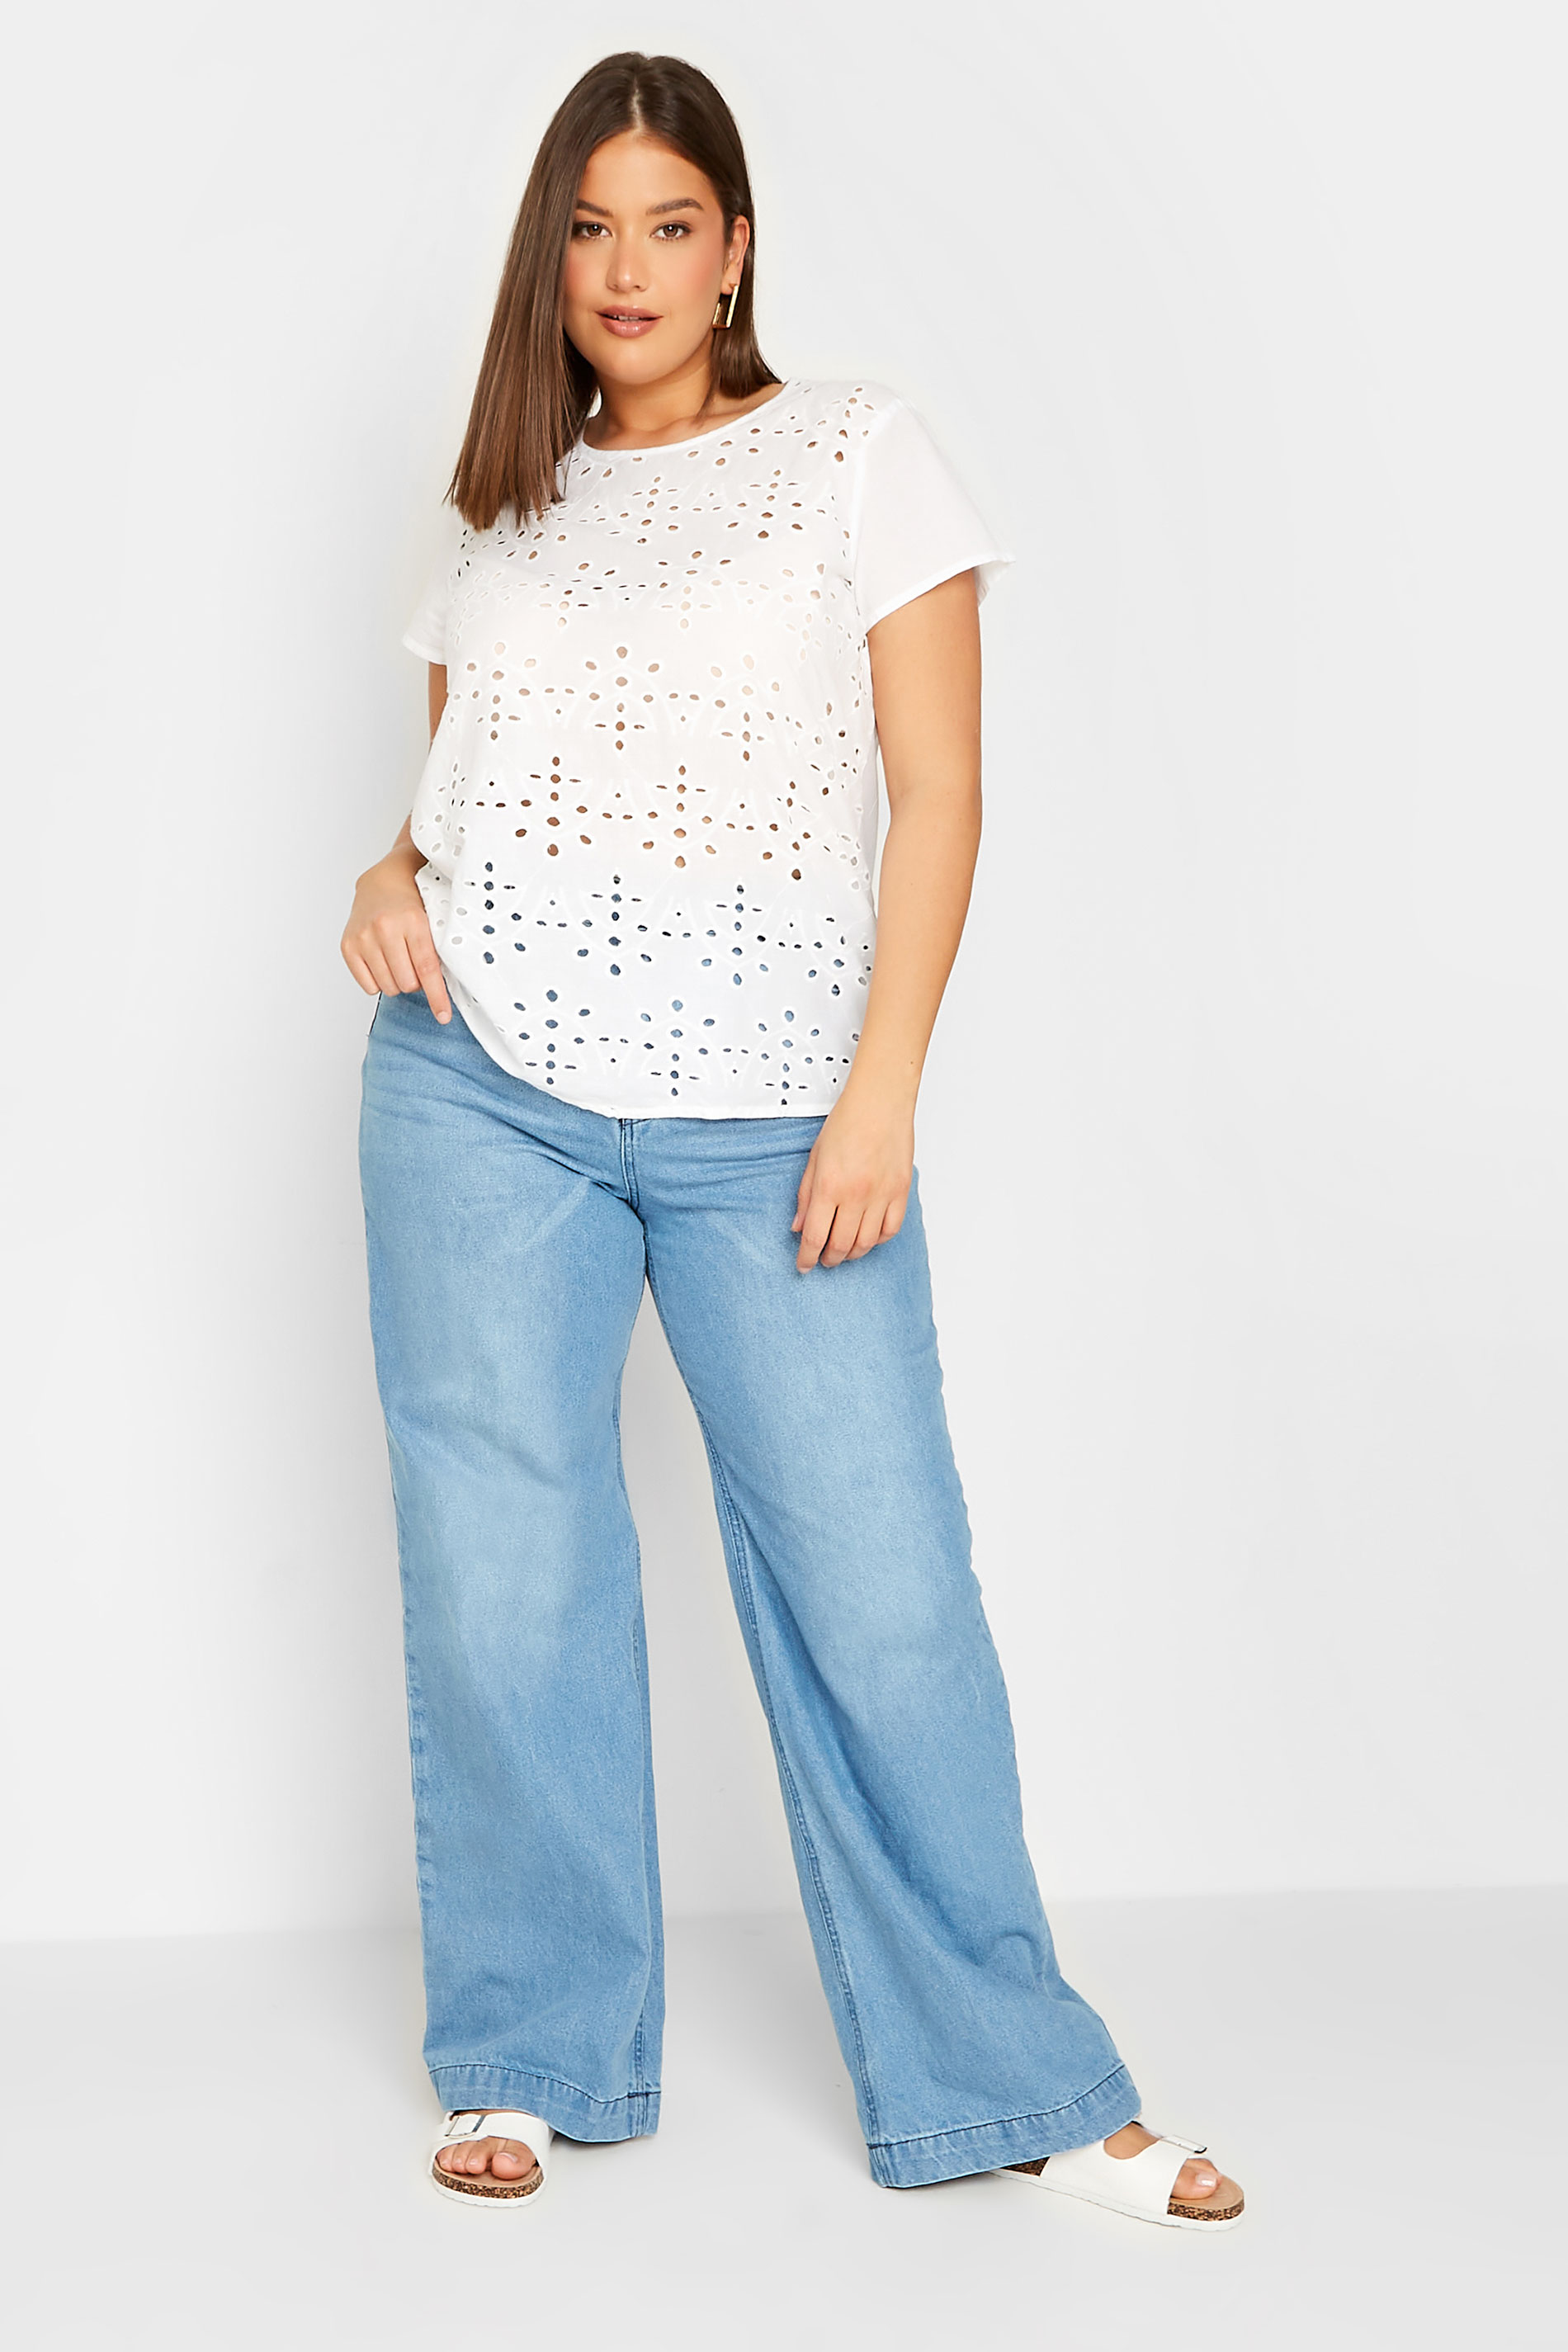 LTS Tall Women's White Broderie Front T-Shirt | Long Tall Sally 2